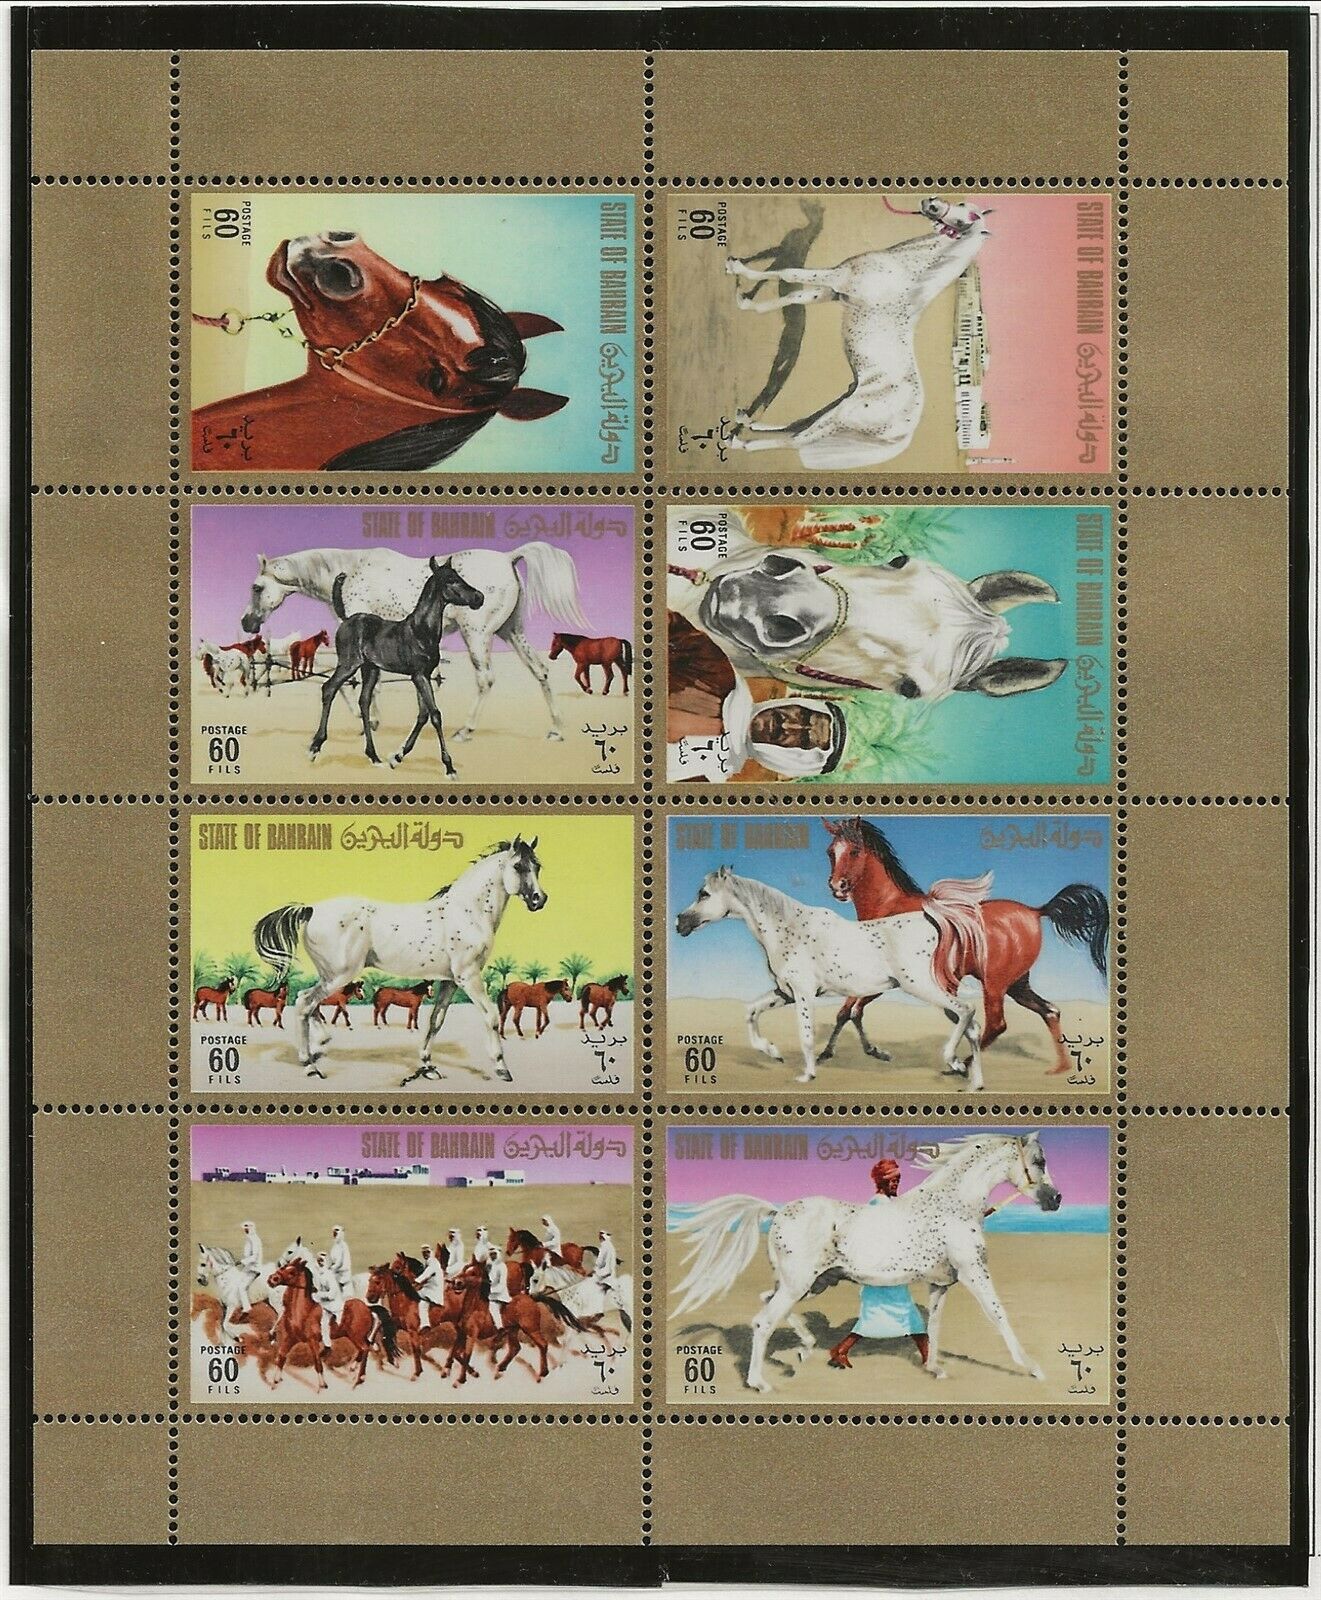 BAHRAIN Sc 224 NH issue of 1975 - MINISHEET - HORSES